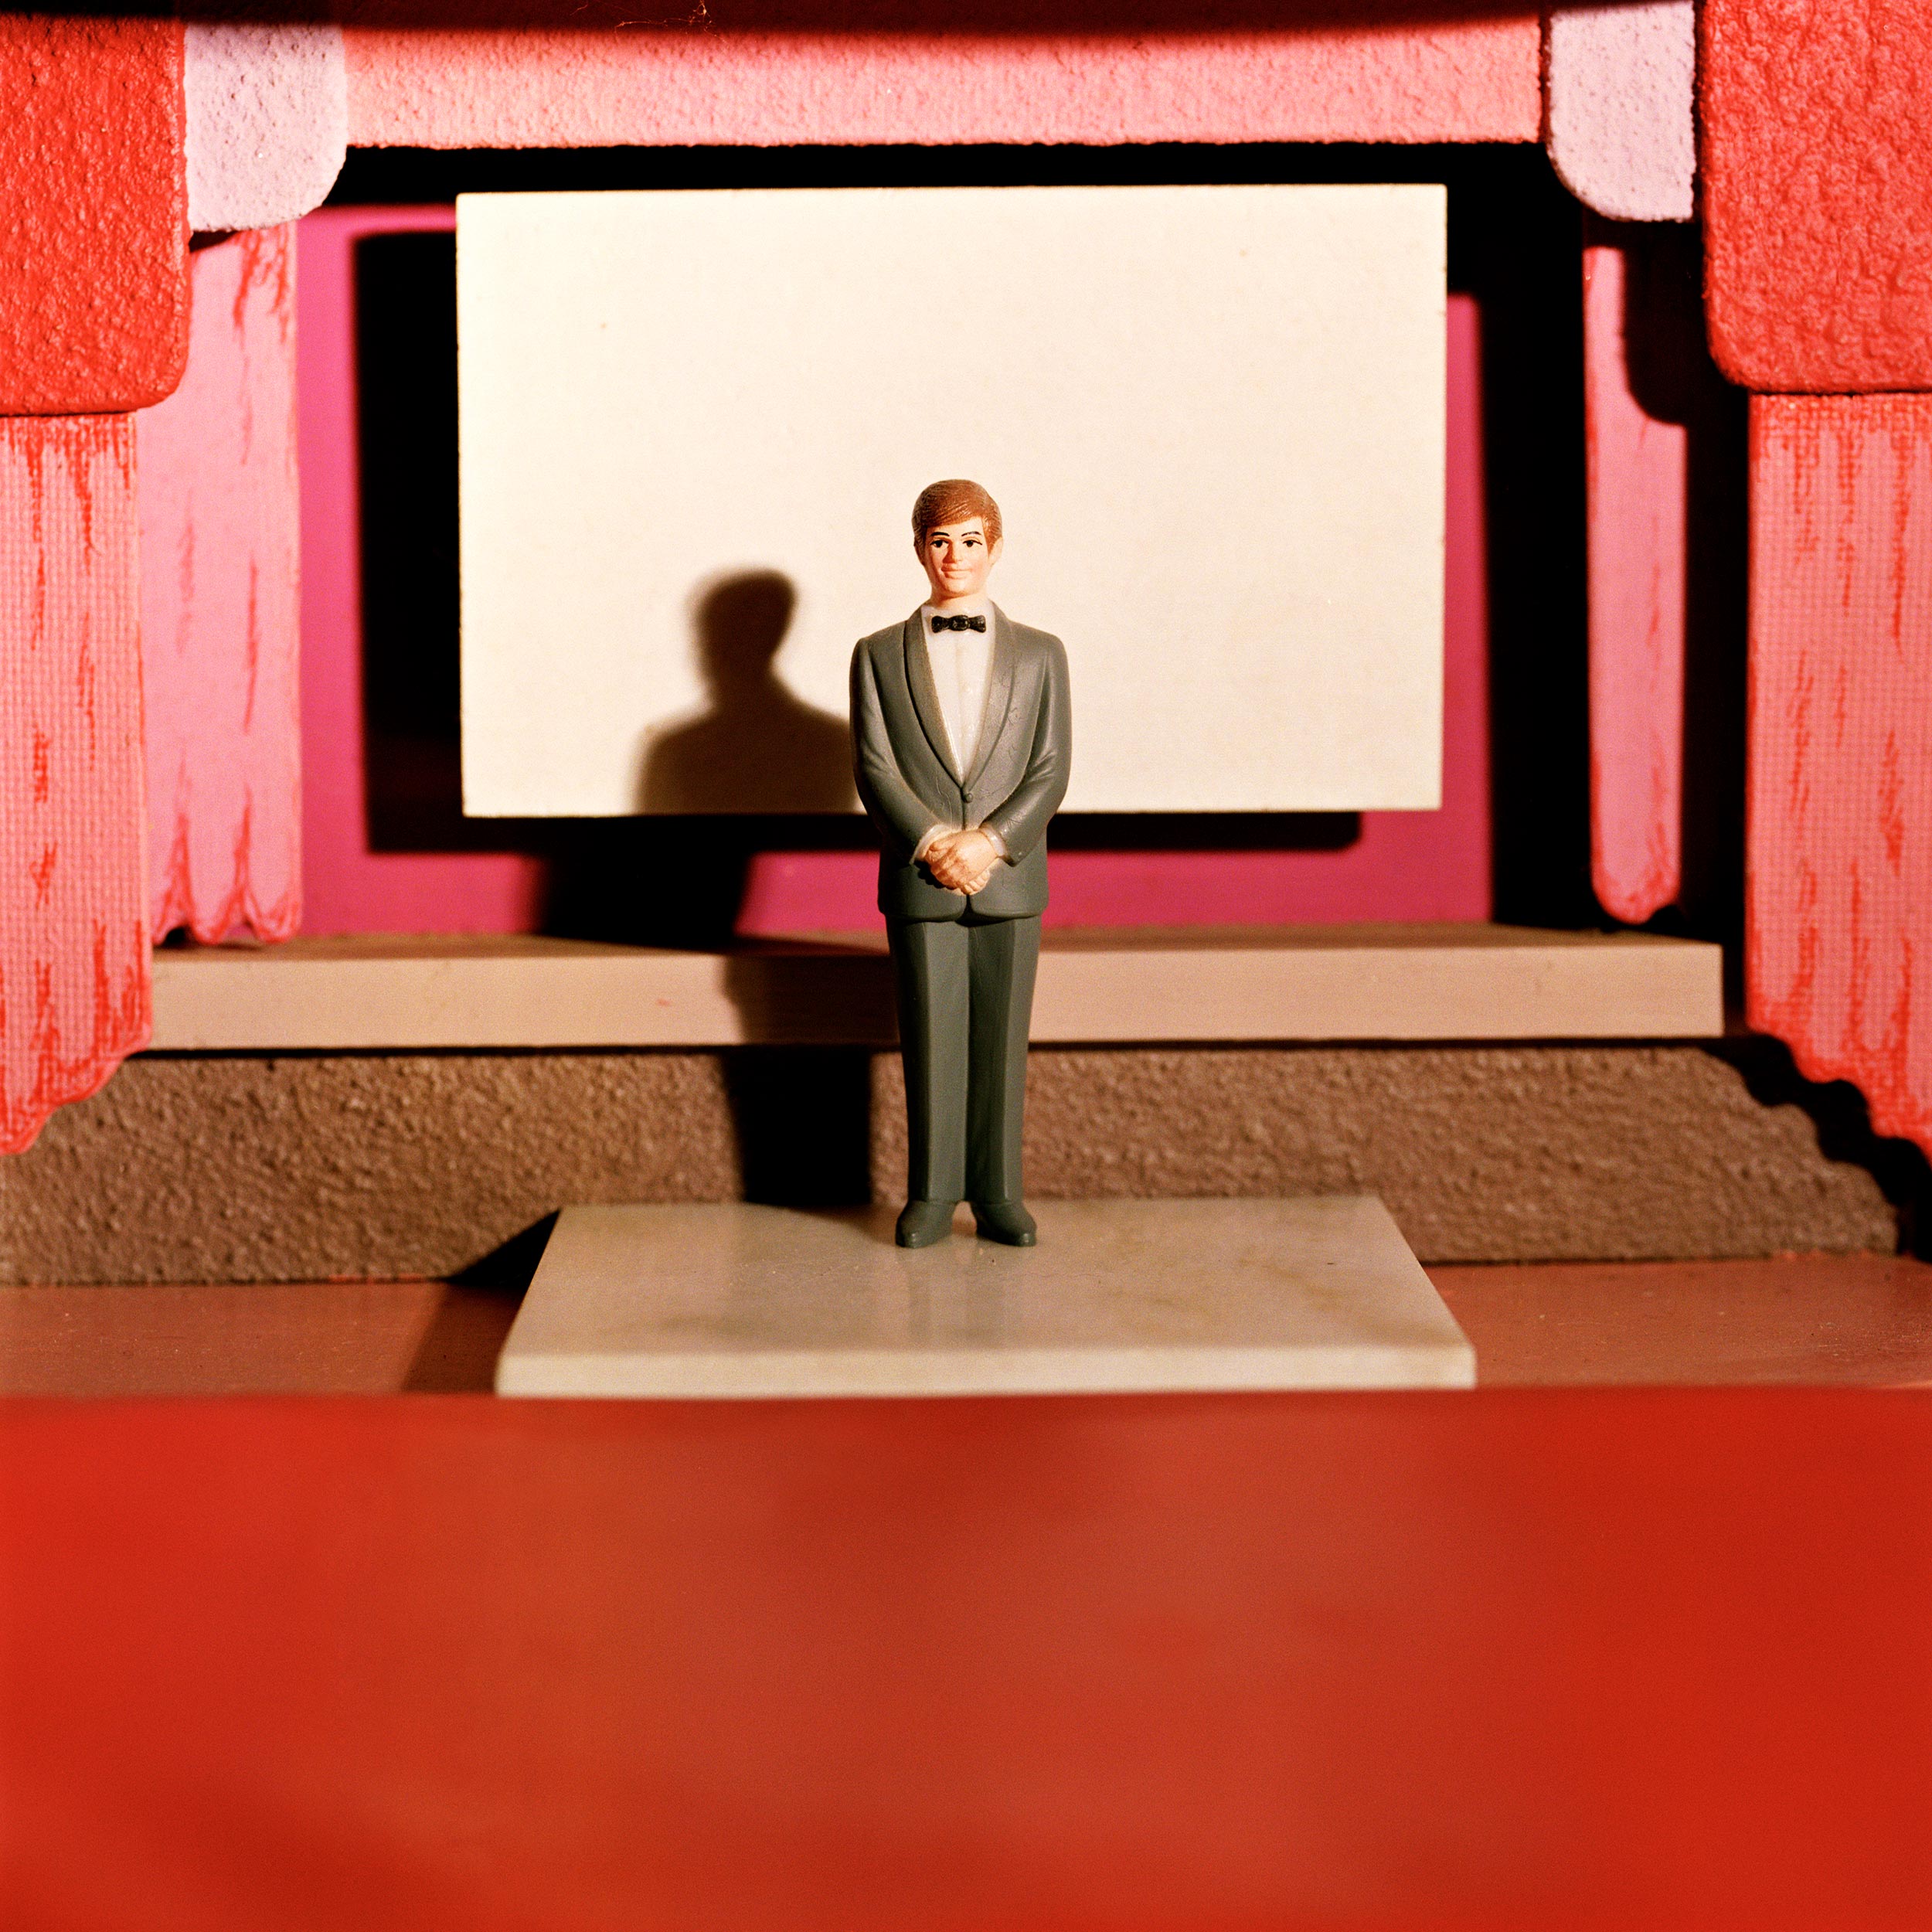 Ken Doll and Theater Proscenium Model